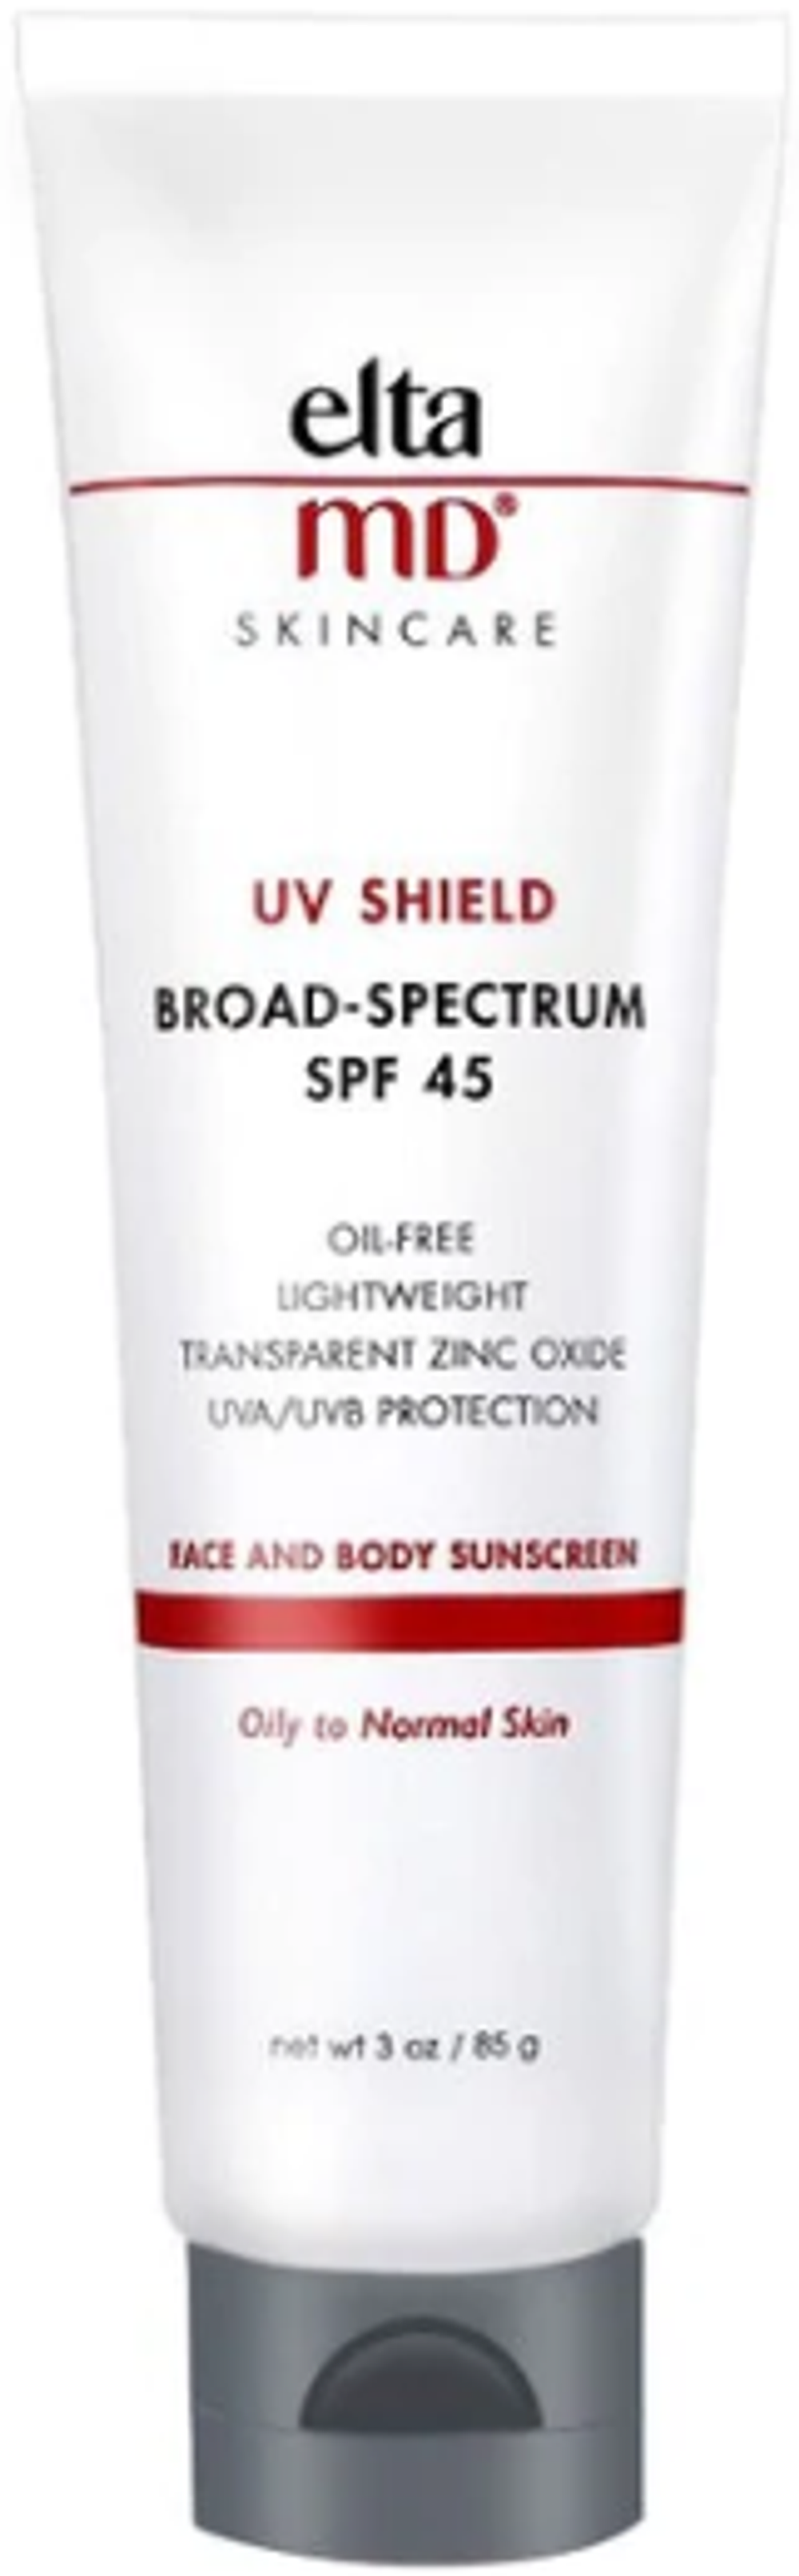 elta MD UV Shield Broad-Spectrum солнцезащитное средство для лица и тела SPF45 85г